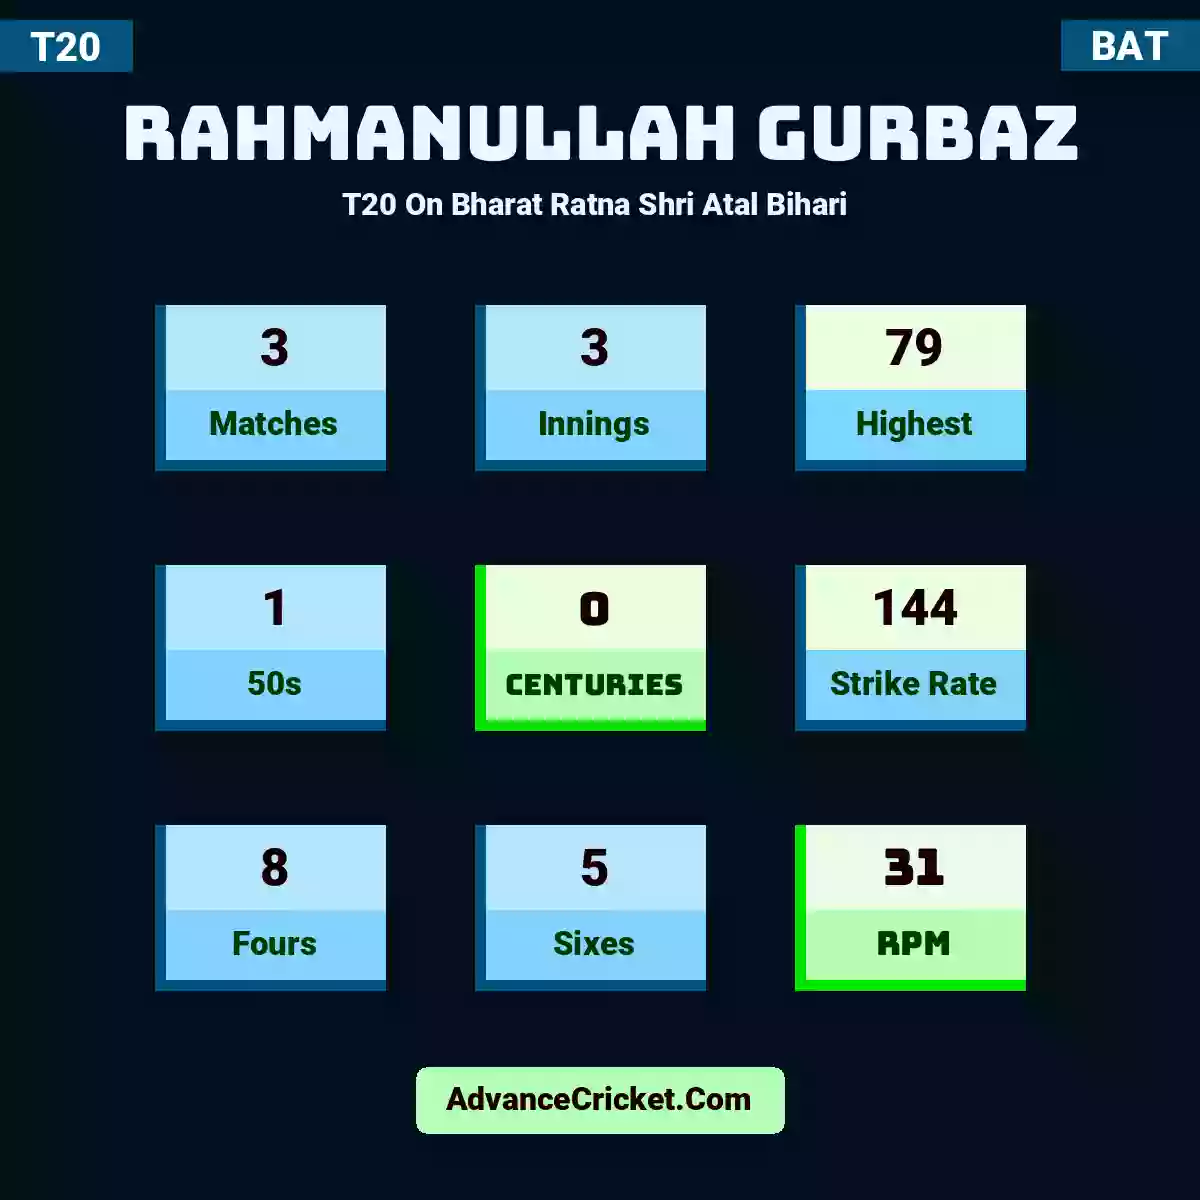 Rahmanullah Gurbaz T20  On Bharat Ratna Shri Atal Bihari , Rahmanullah Gurbaz played 3 matches, scored 79 runs as highest, 1 half-centuries, and 0 centuries, with a strike rate of 144. R.Gurbaz hit 8 fours and 5 sixes, with an RPM of 31.